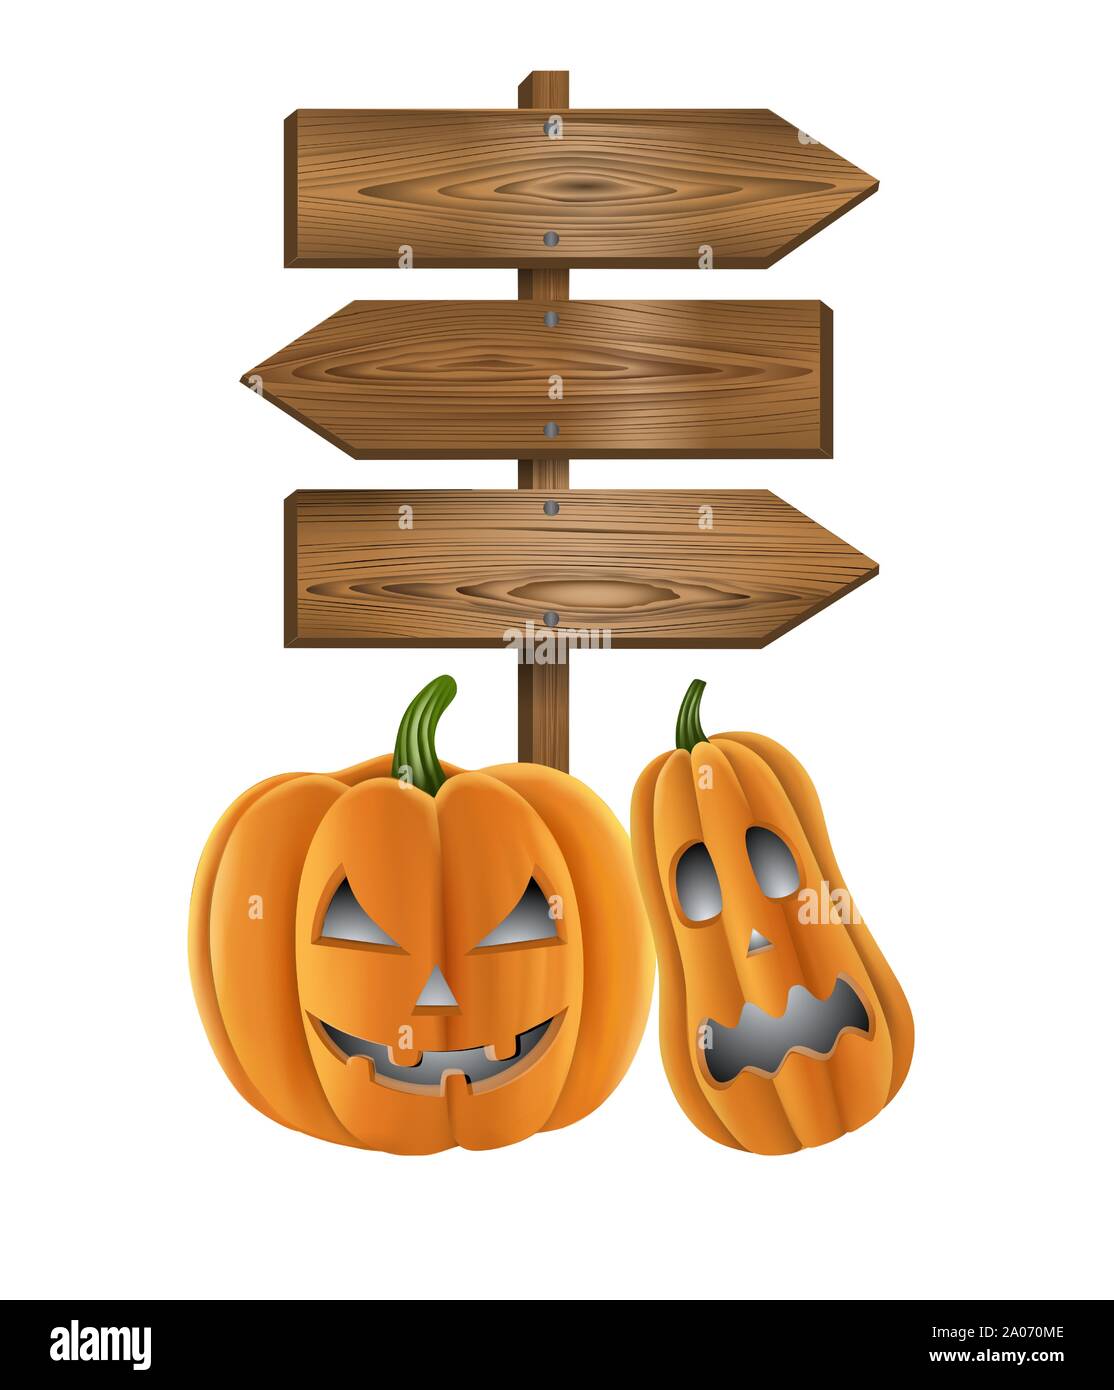 halloween wooden sign and pumpkins illustration Stock Vector